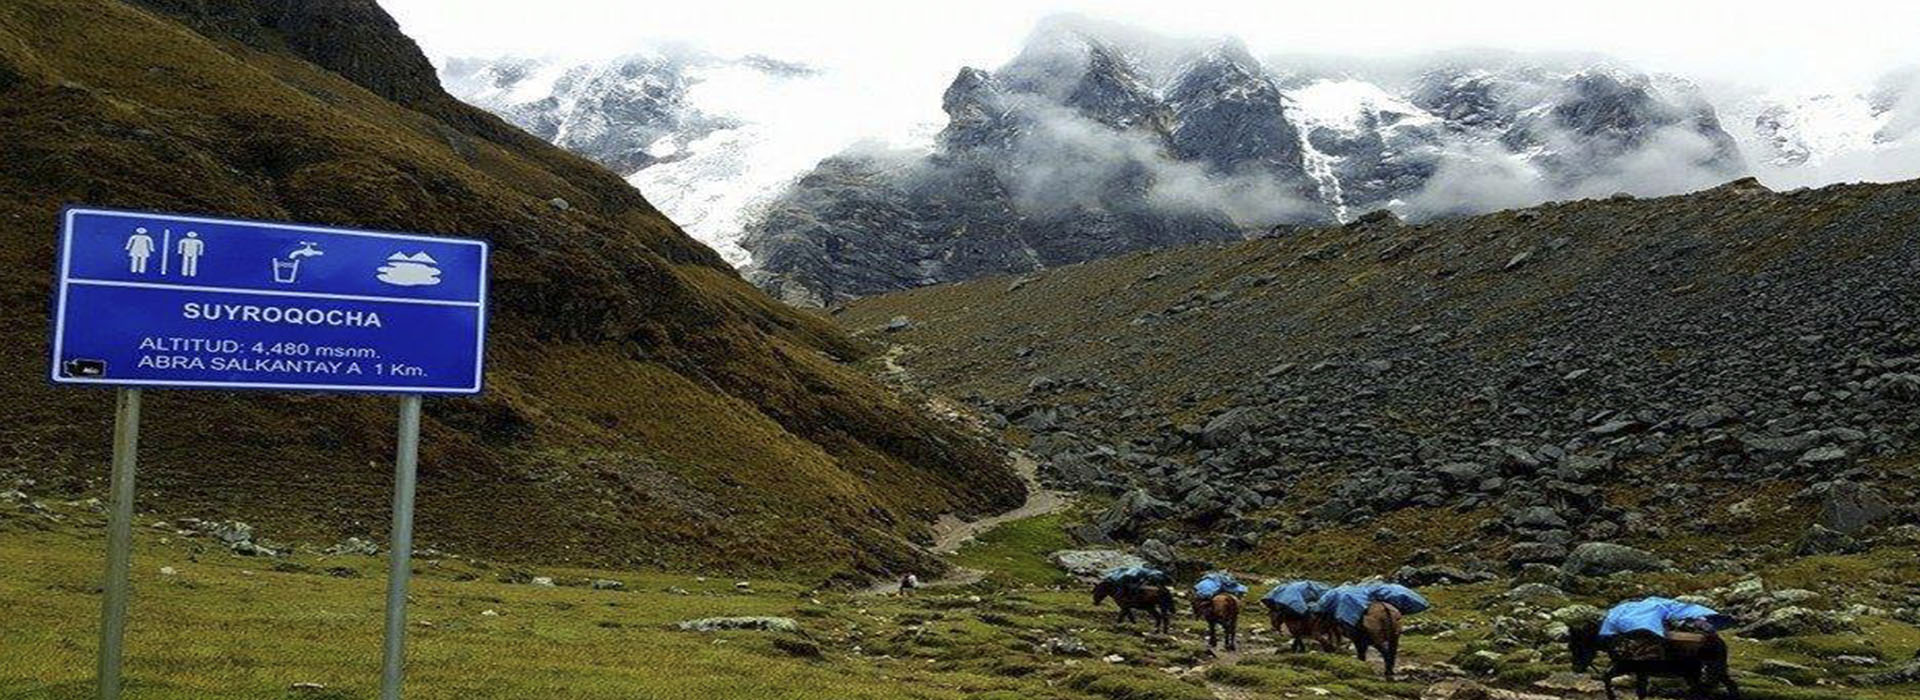 Salkantay Trek to Machu Picchu 4 days return by bus last day